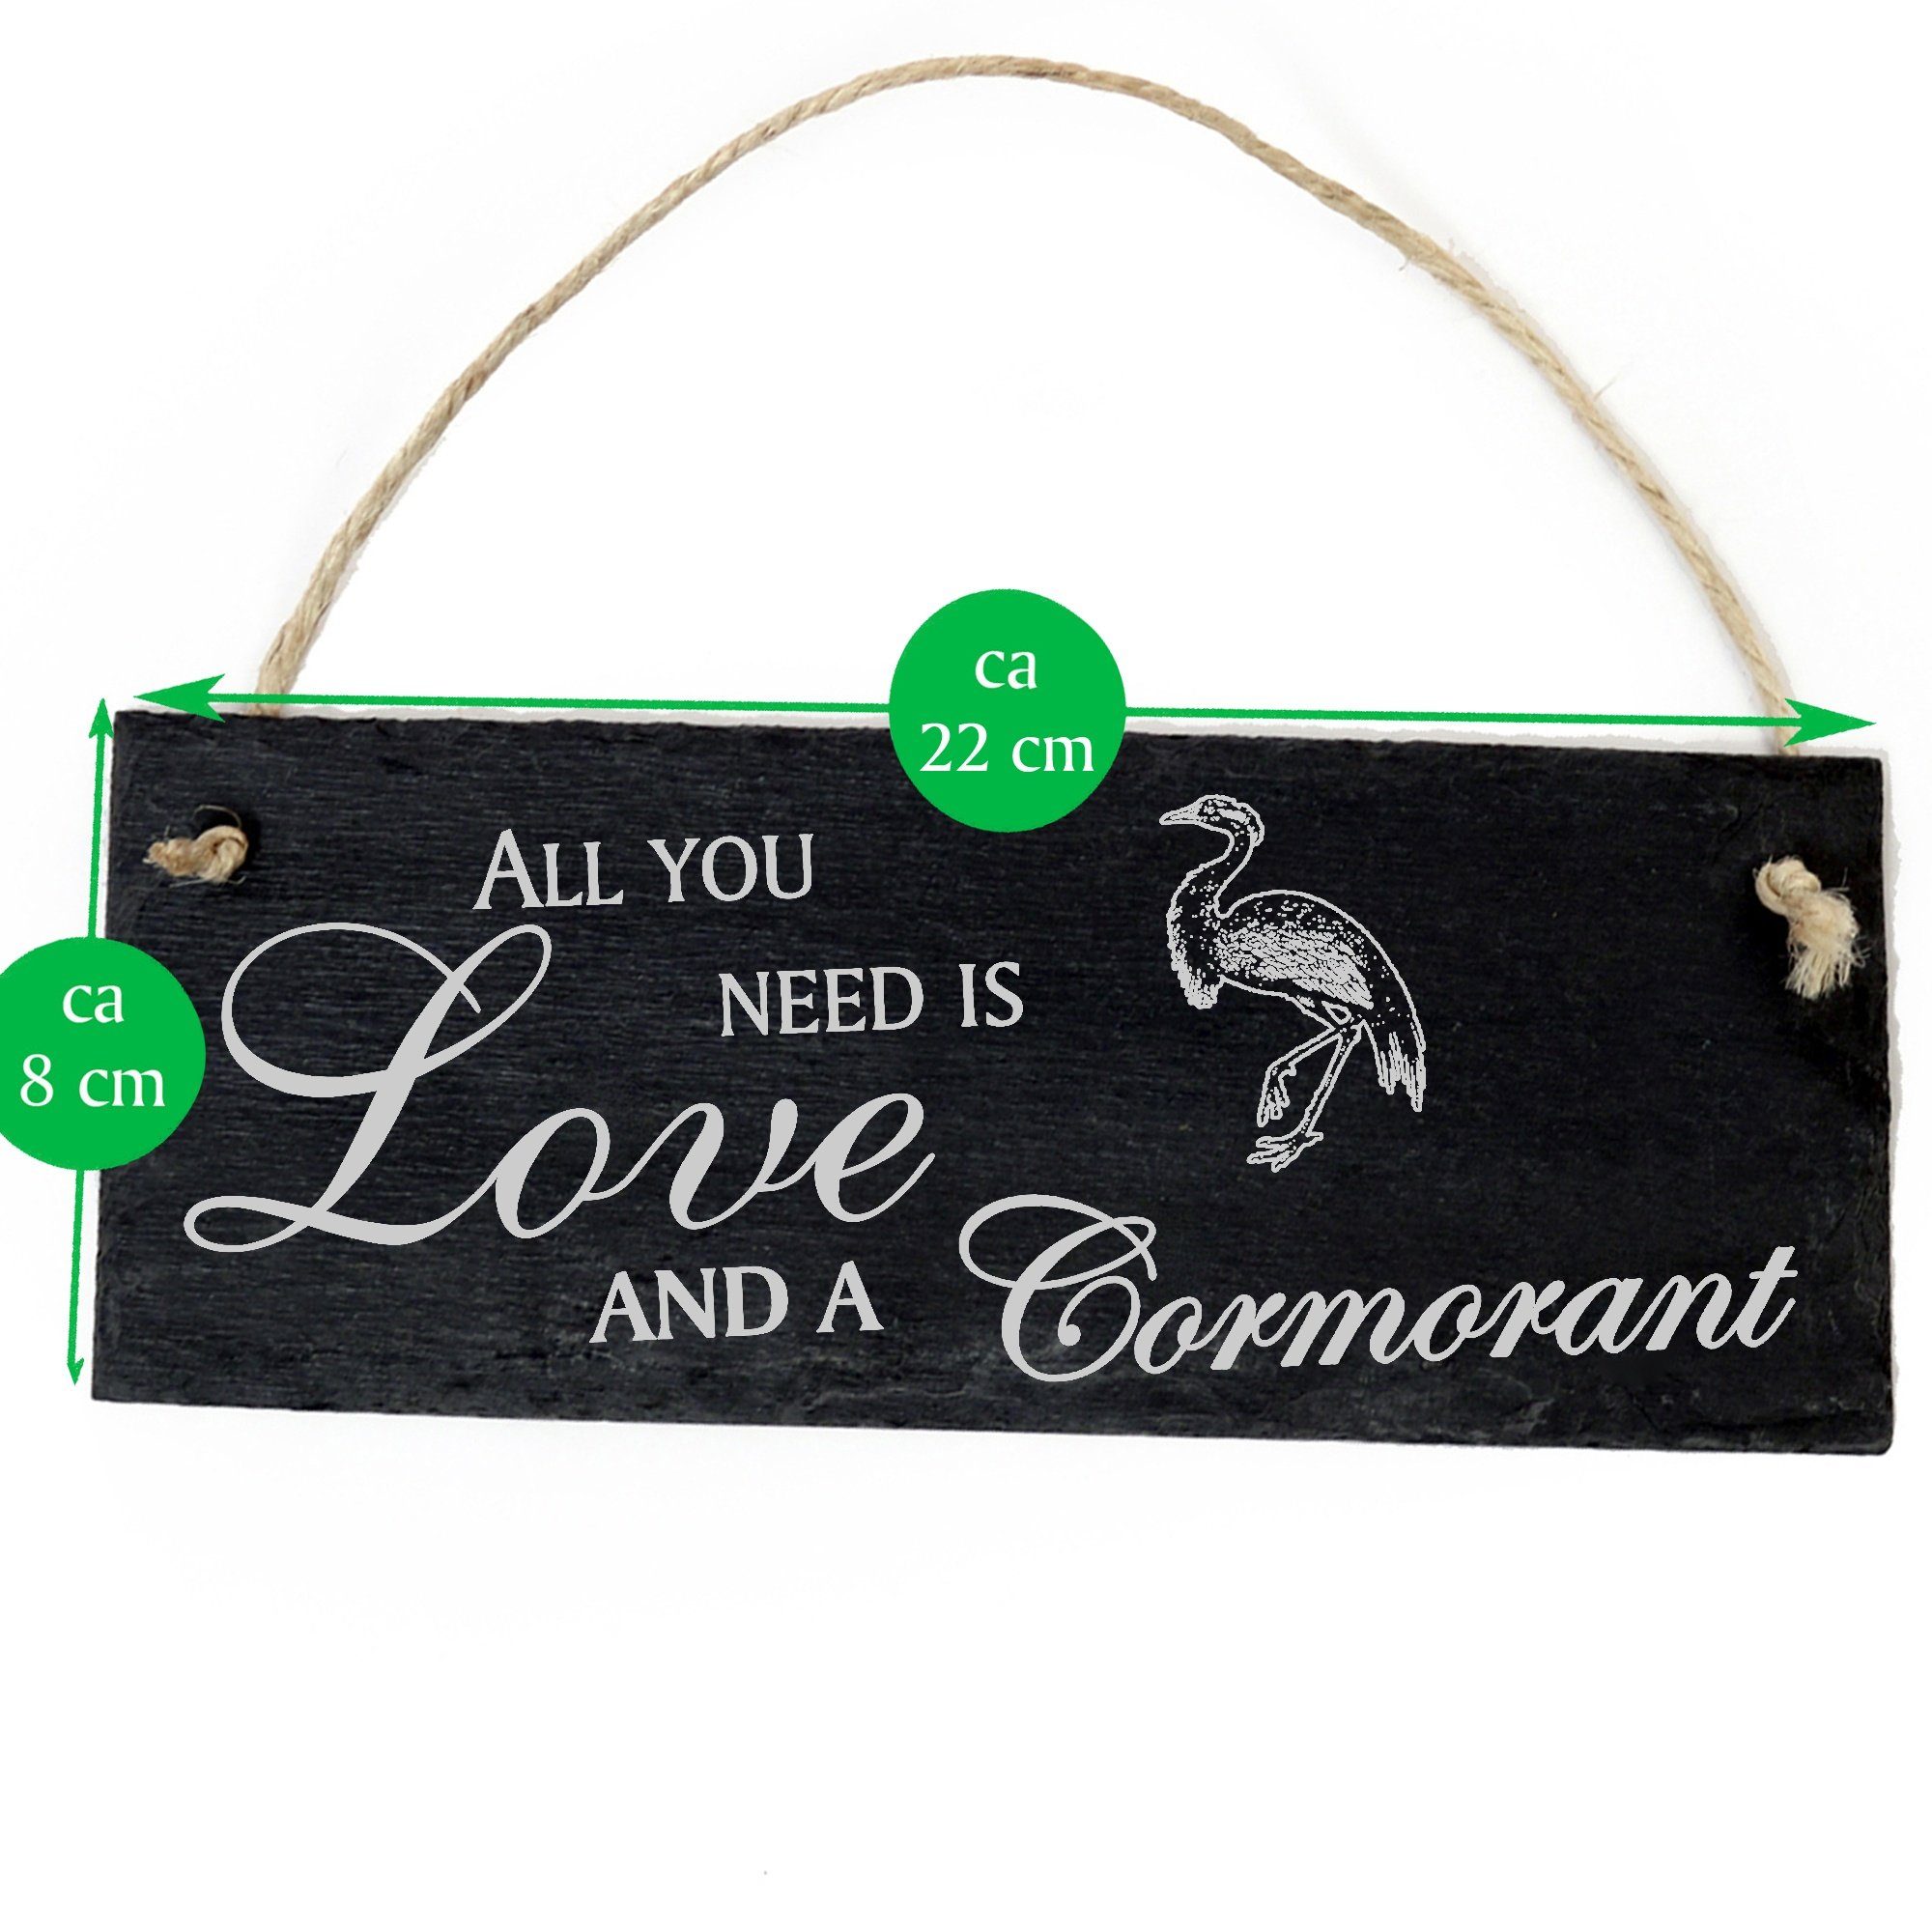 All a Cormorant is Dekolando Love and need Hängedekoration Kormoran you 22x8cm